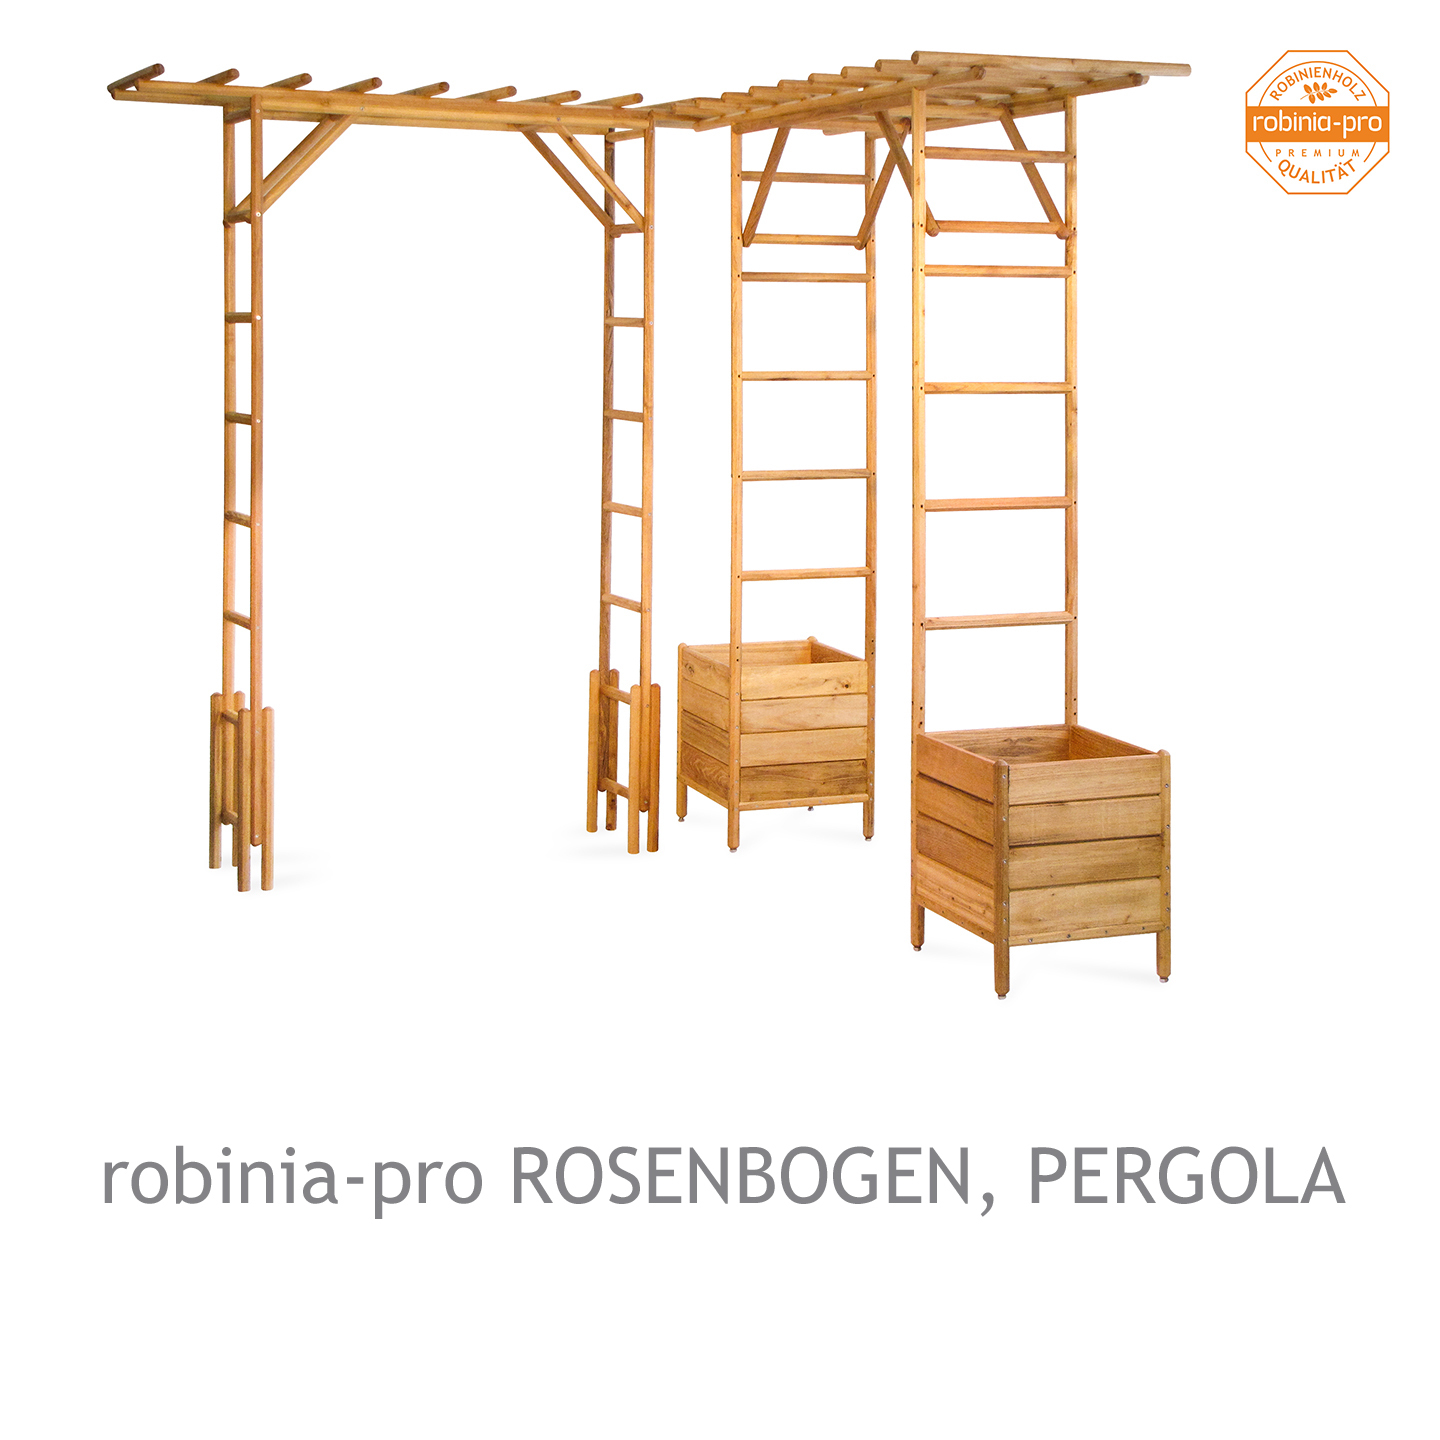 robinia-pro ROSENBOGEN, PERGOLA